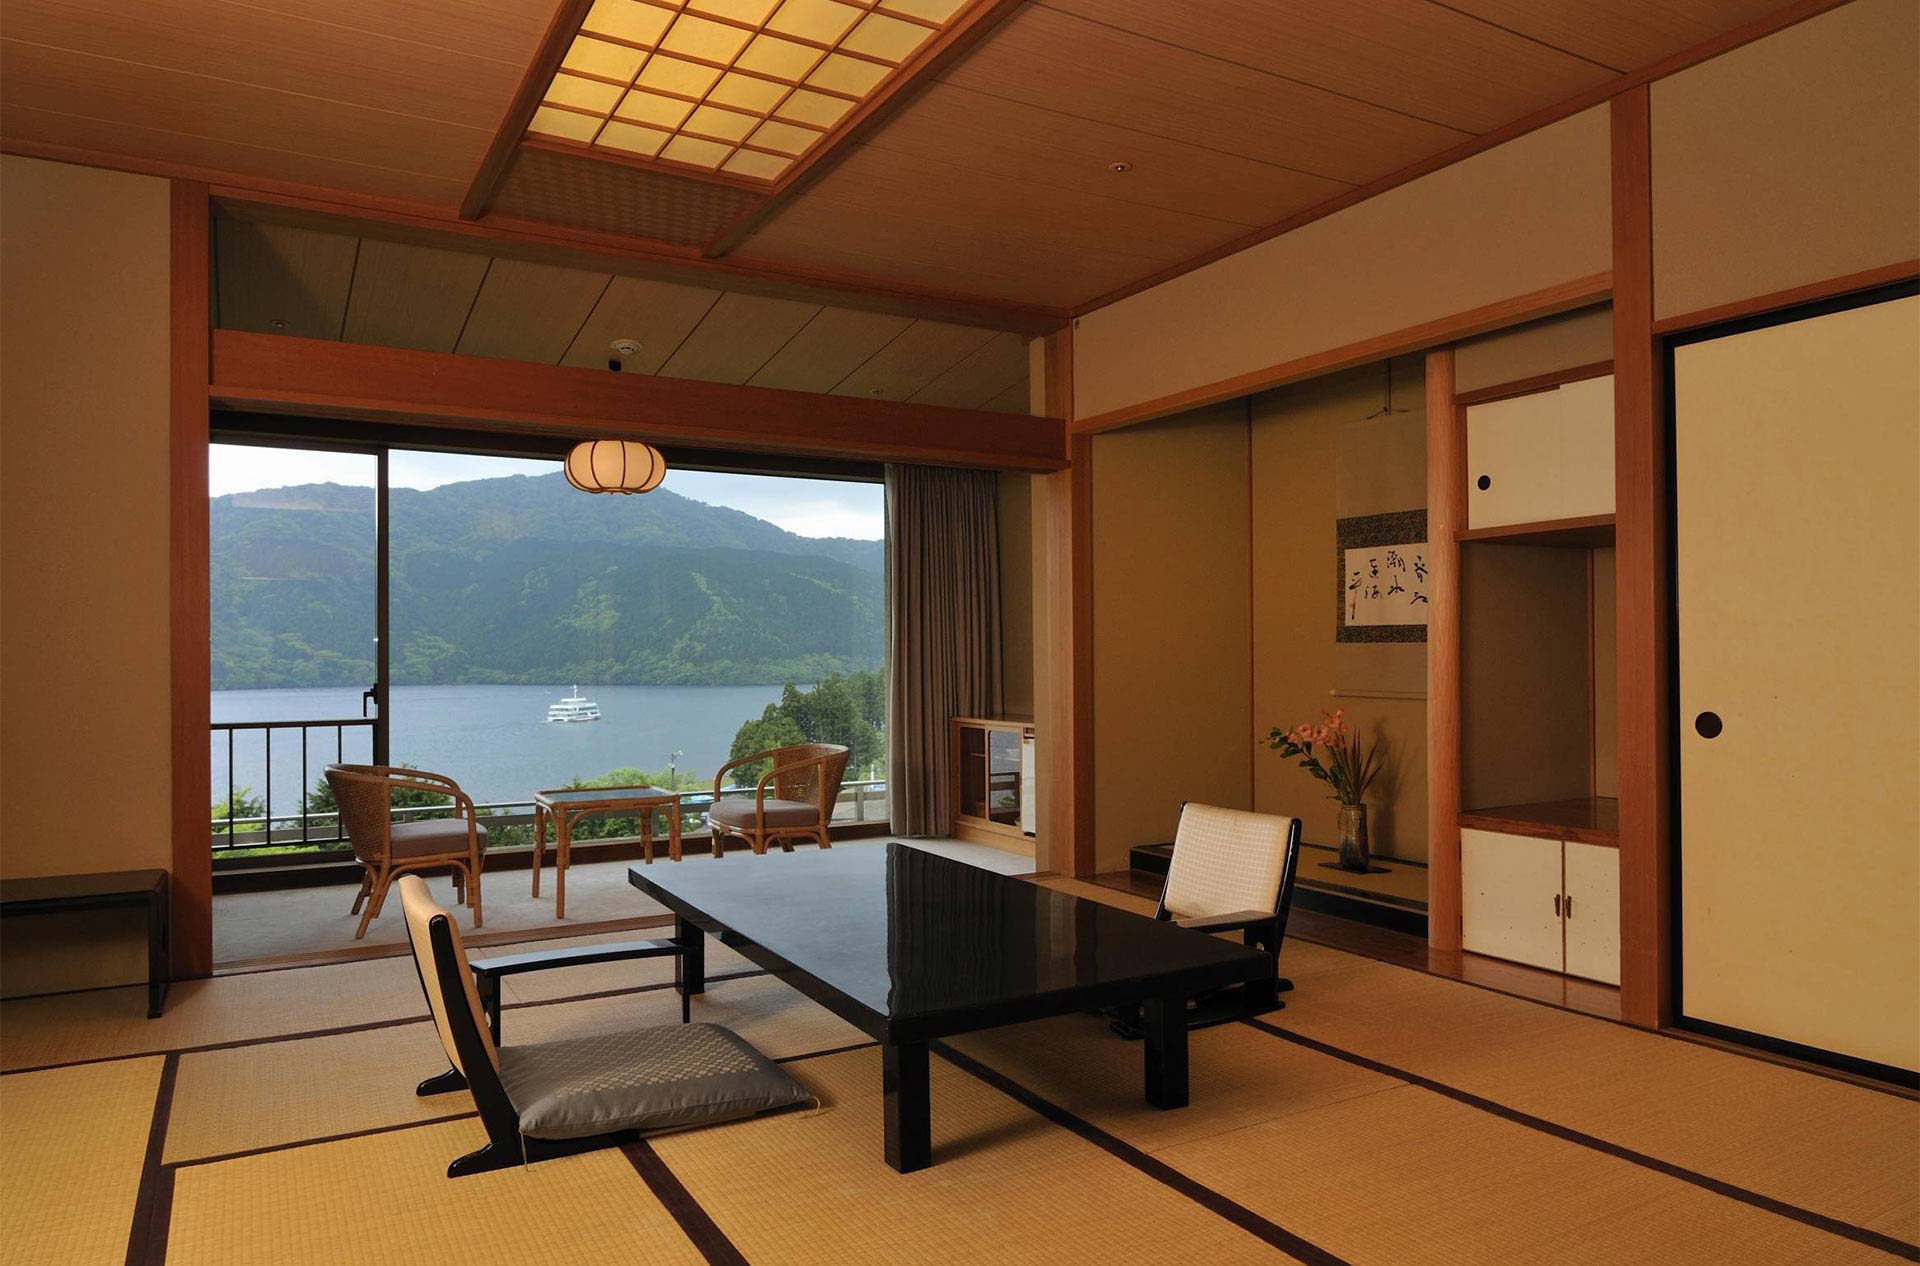 Standard Japanese  style Tatami Rooms  Accommodation in Ryuguden Ryokan 